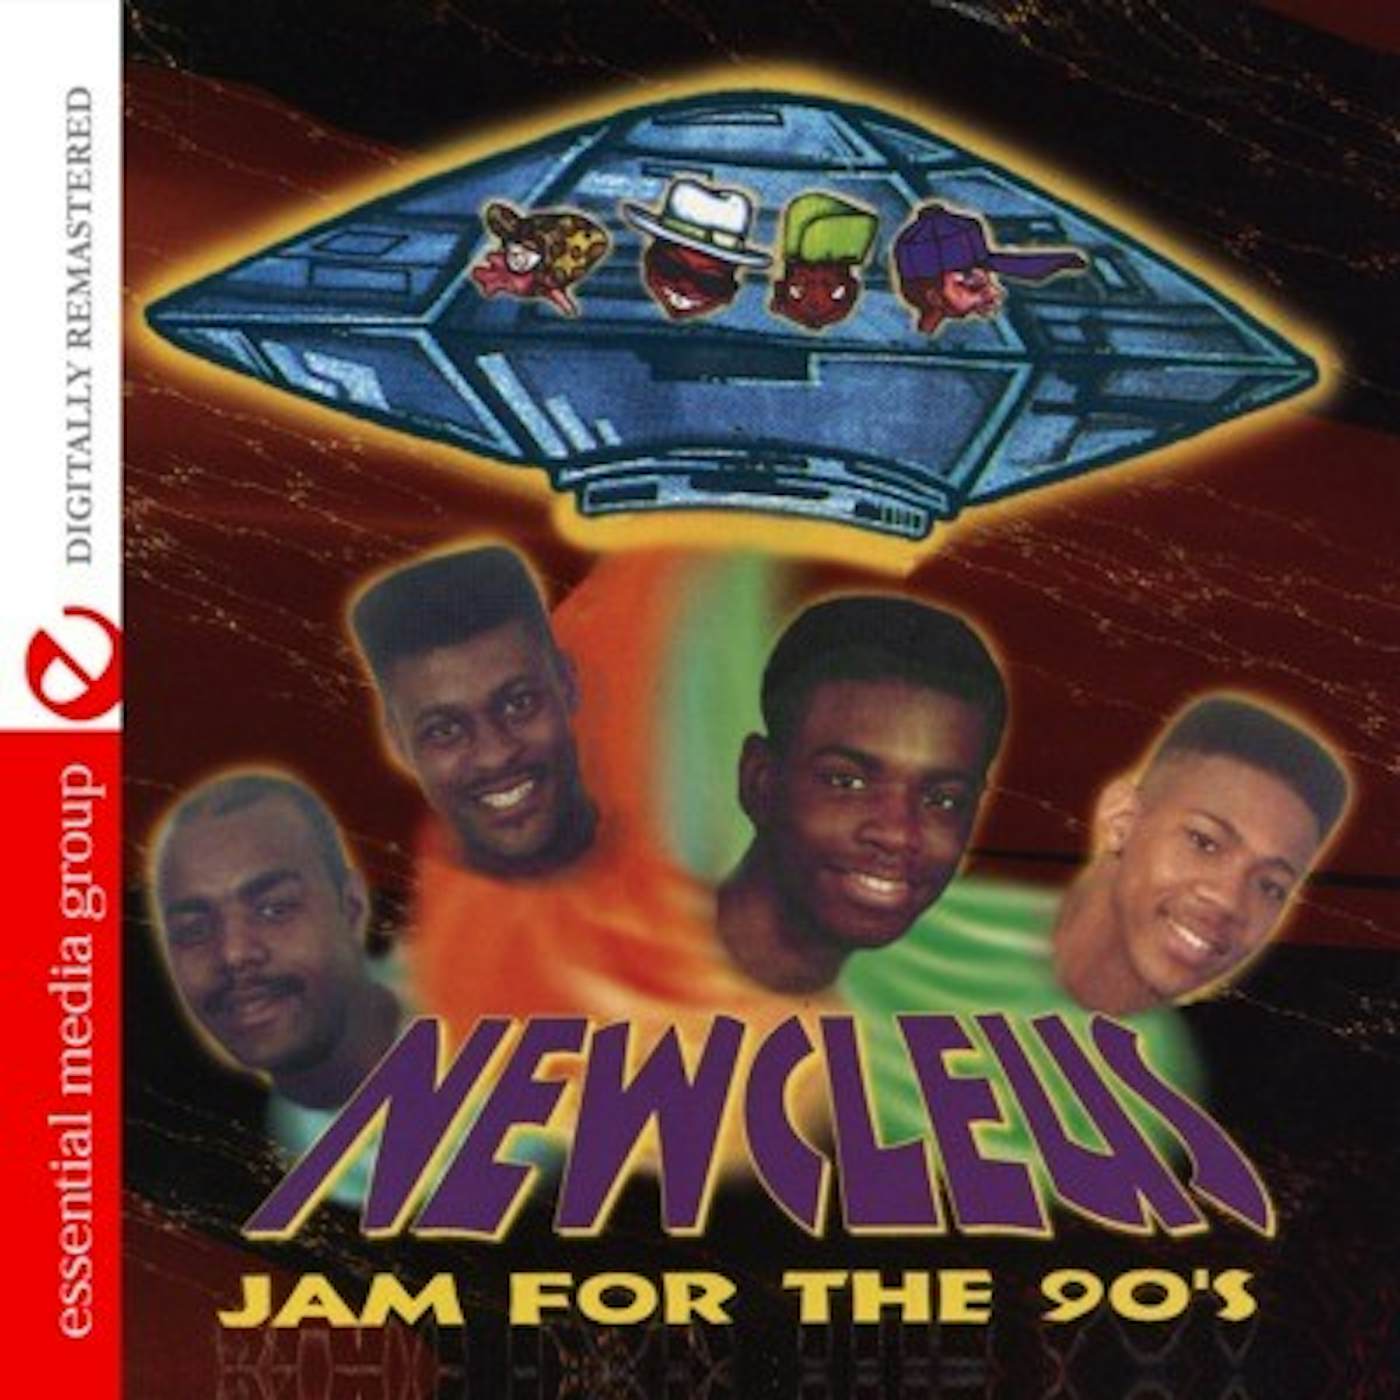 Newcleus JAM FOR THE 90'S CD